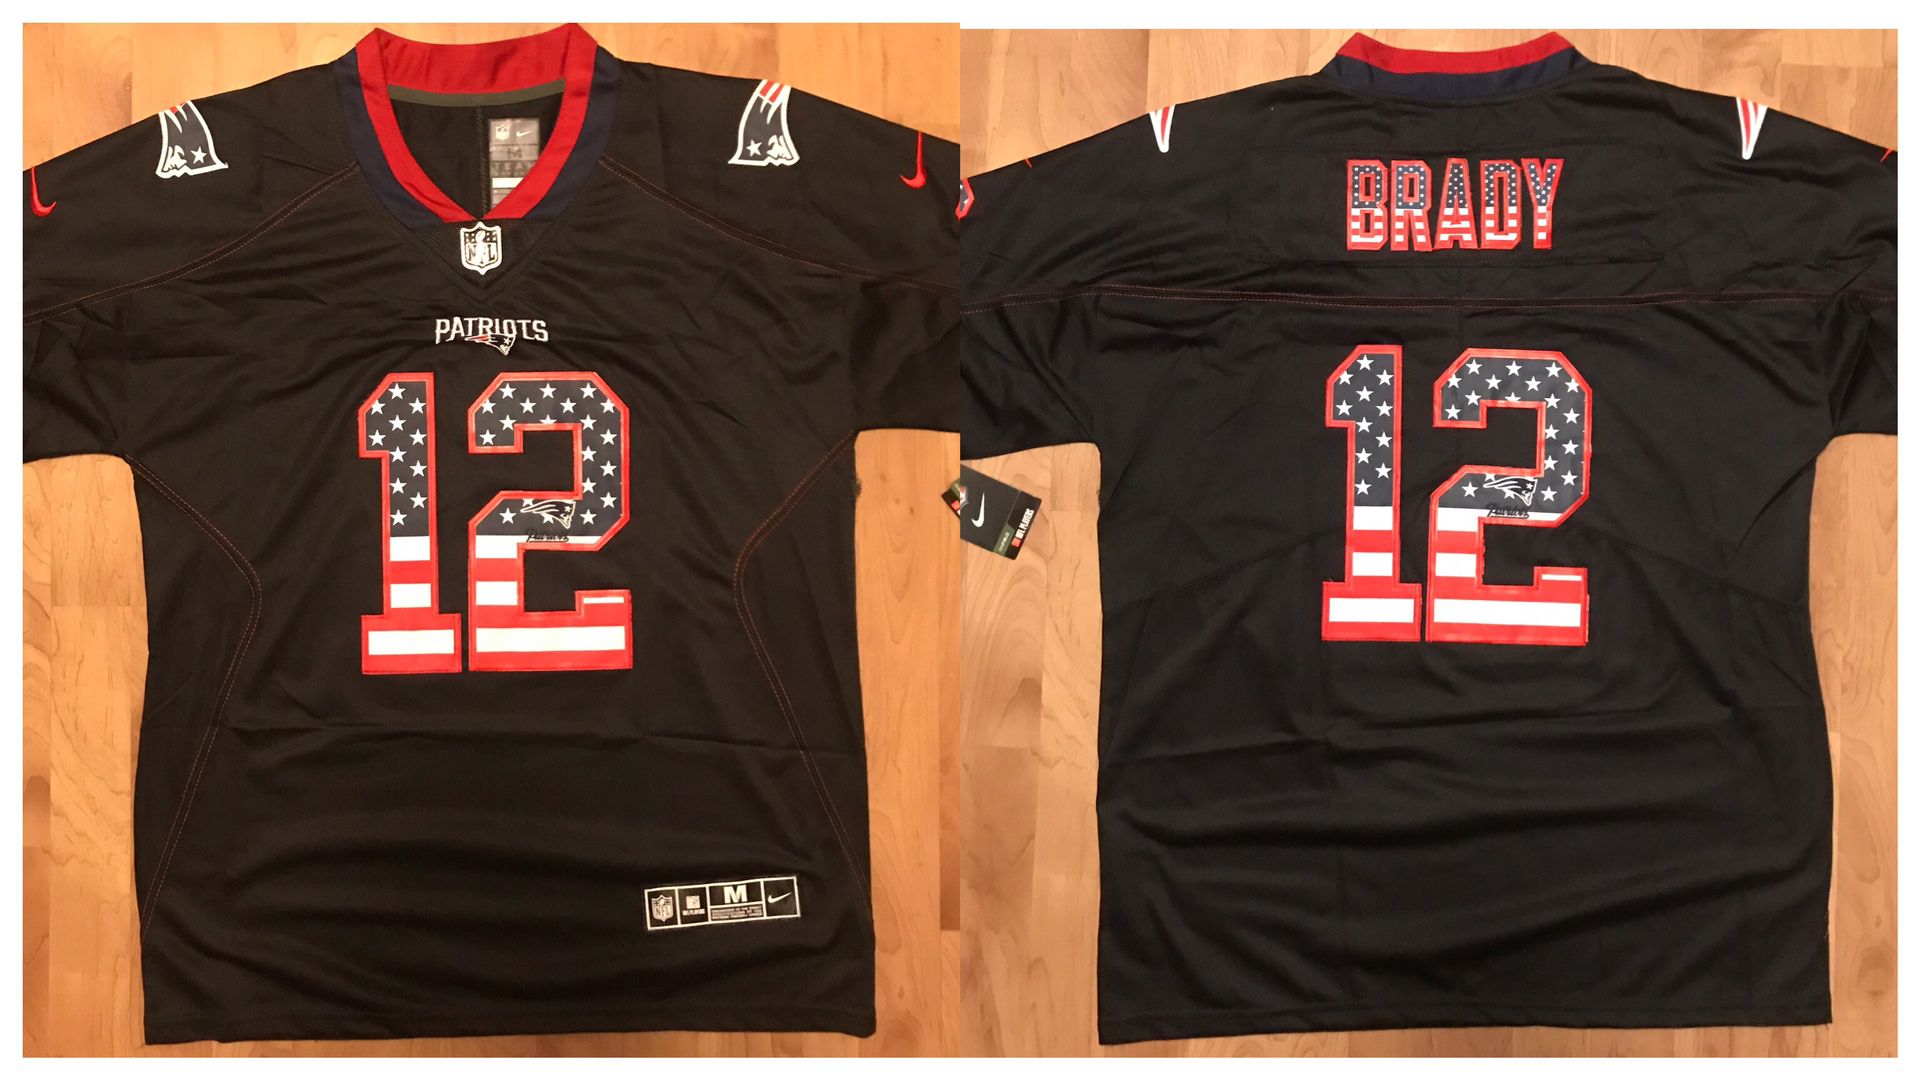 Patriots Nike stiched jerseys